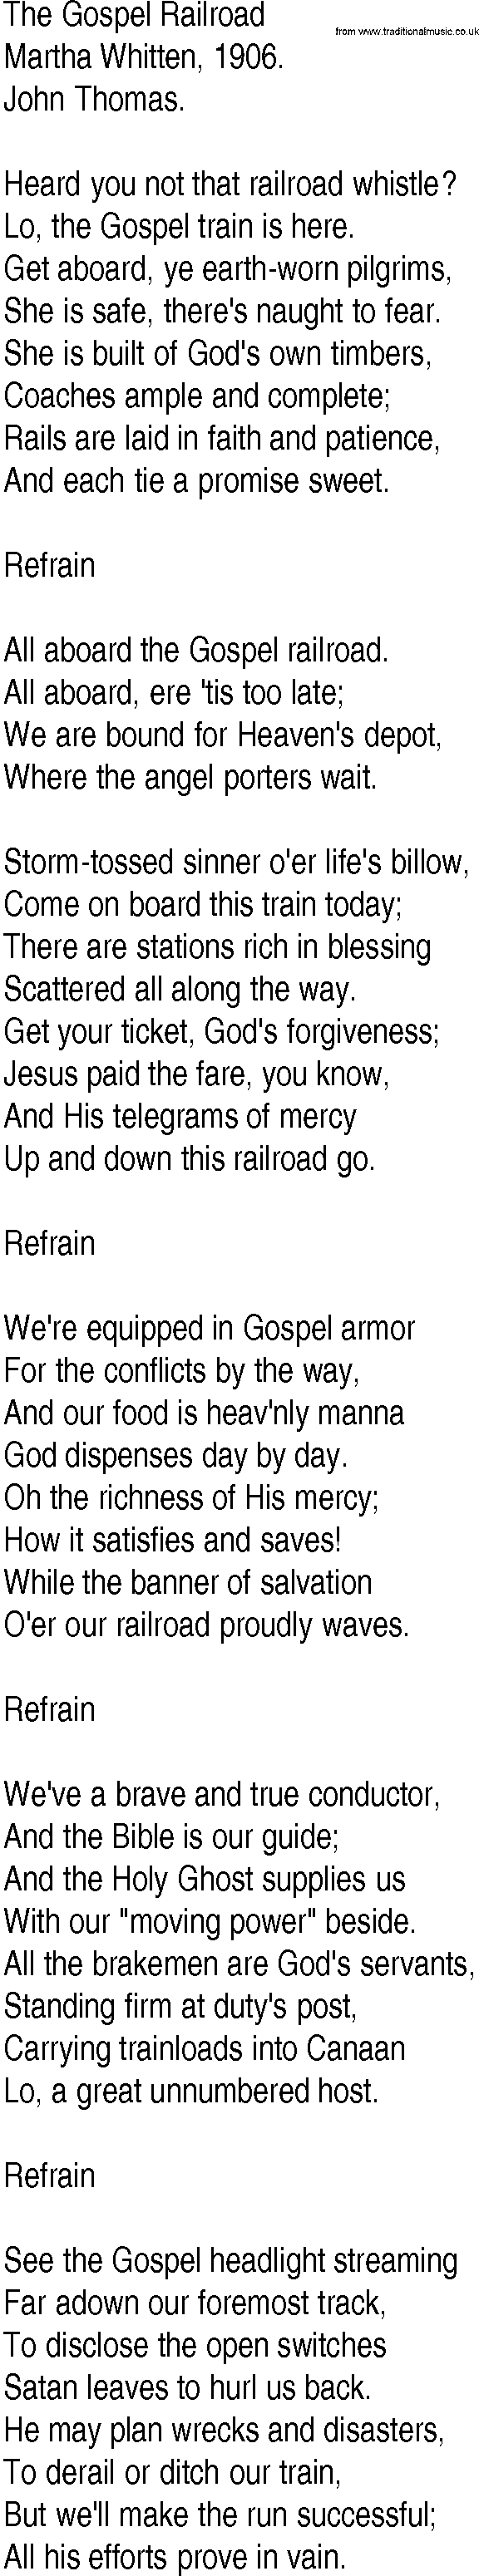 Hymn and Gospel Song: The Gospel Railroad by Martha Whitten lyrics